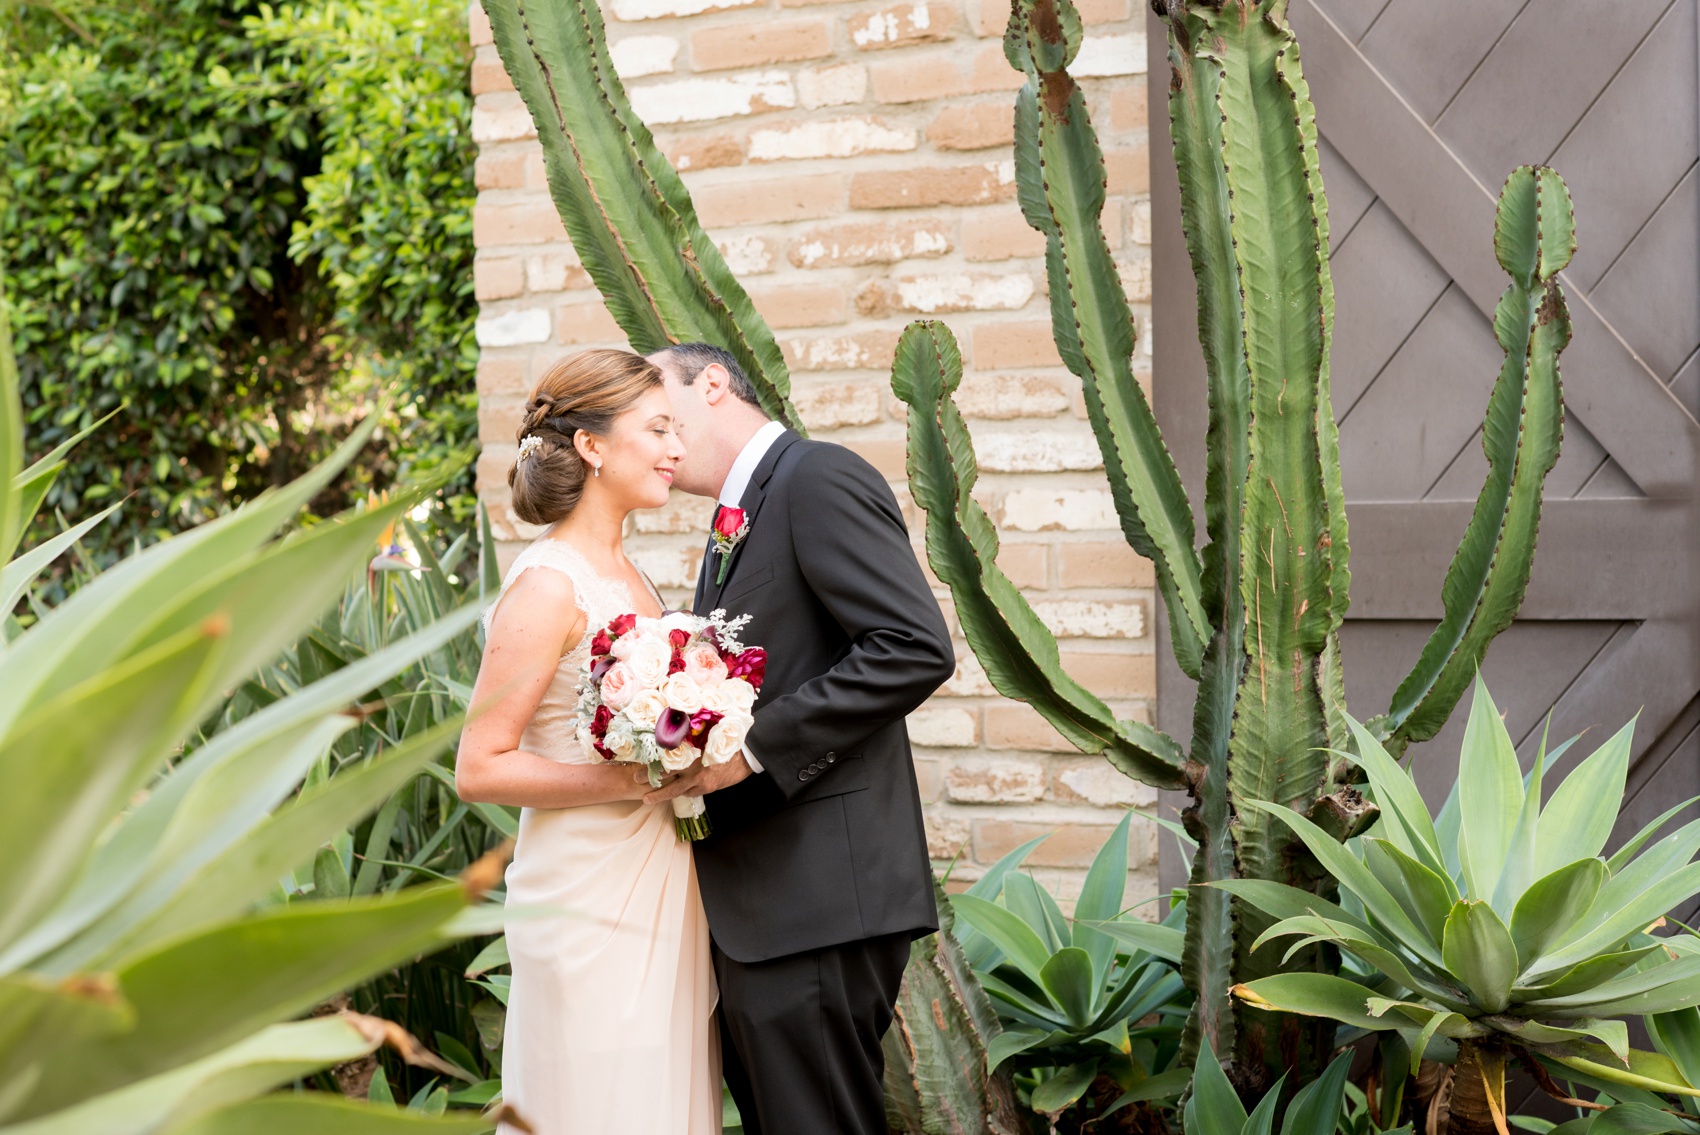 Estancia La Jolla wedding photography by Mikkel Paige Photography. Tropical wedding, California coast. Bride and groom photos.